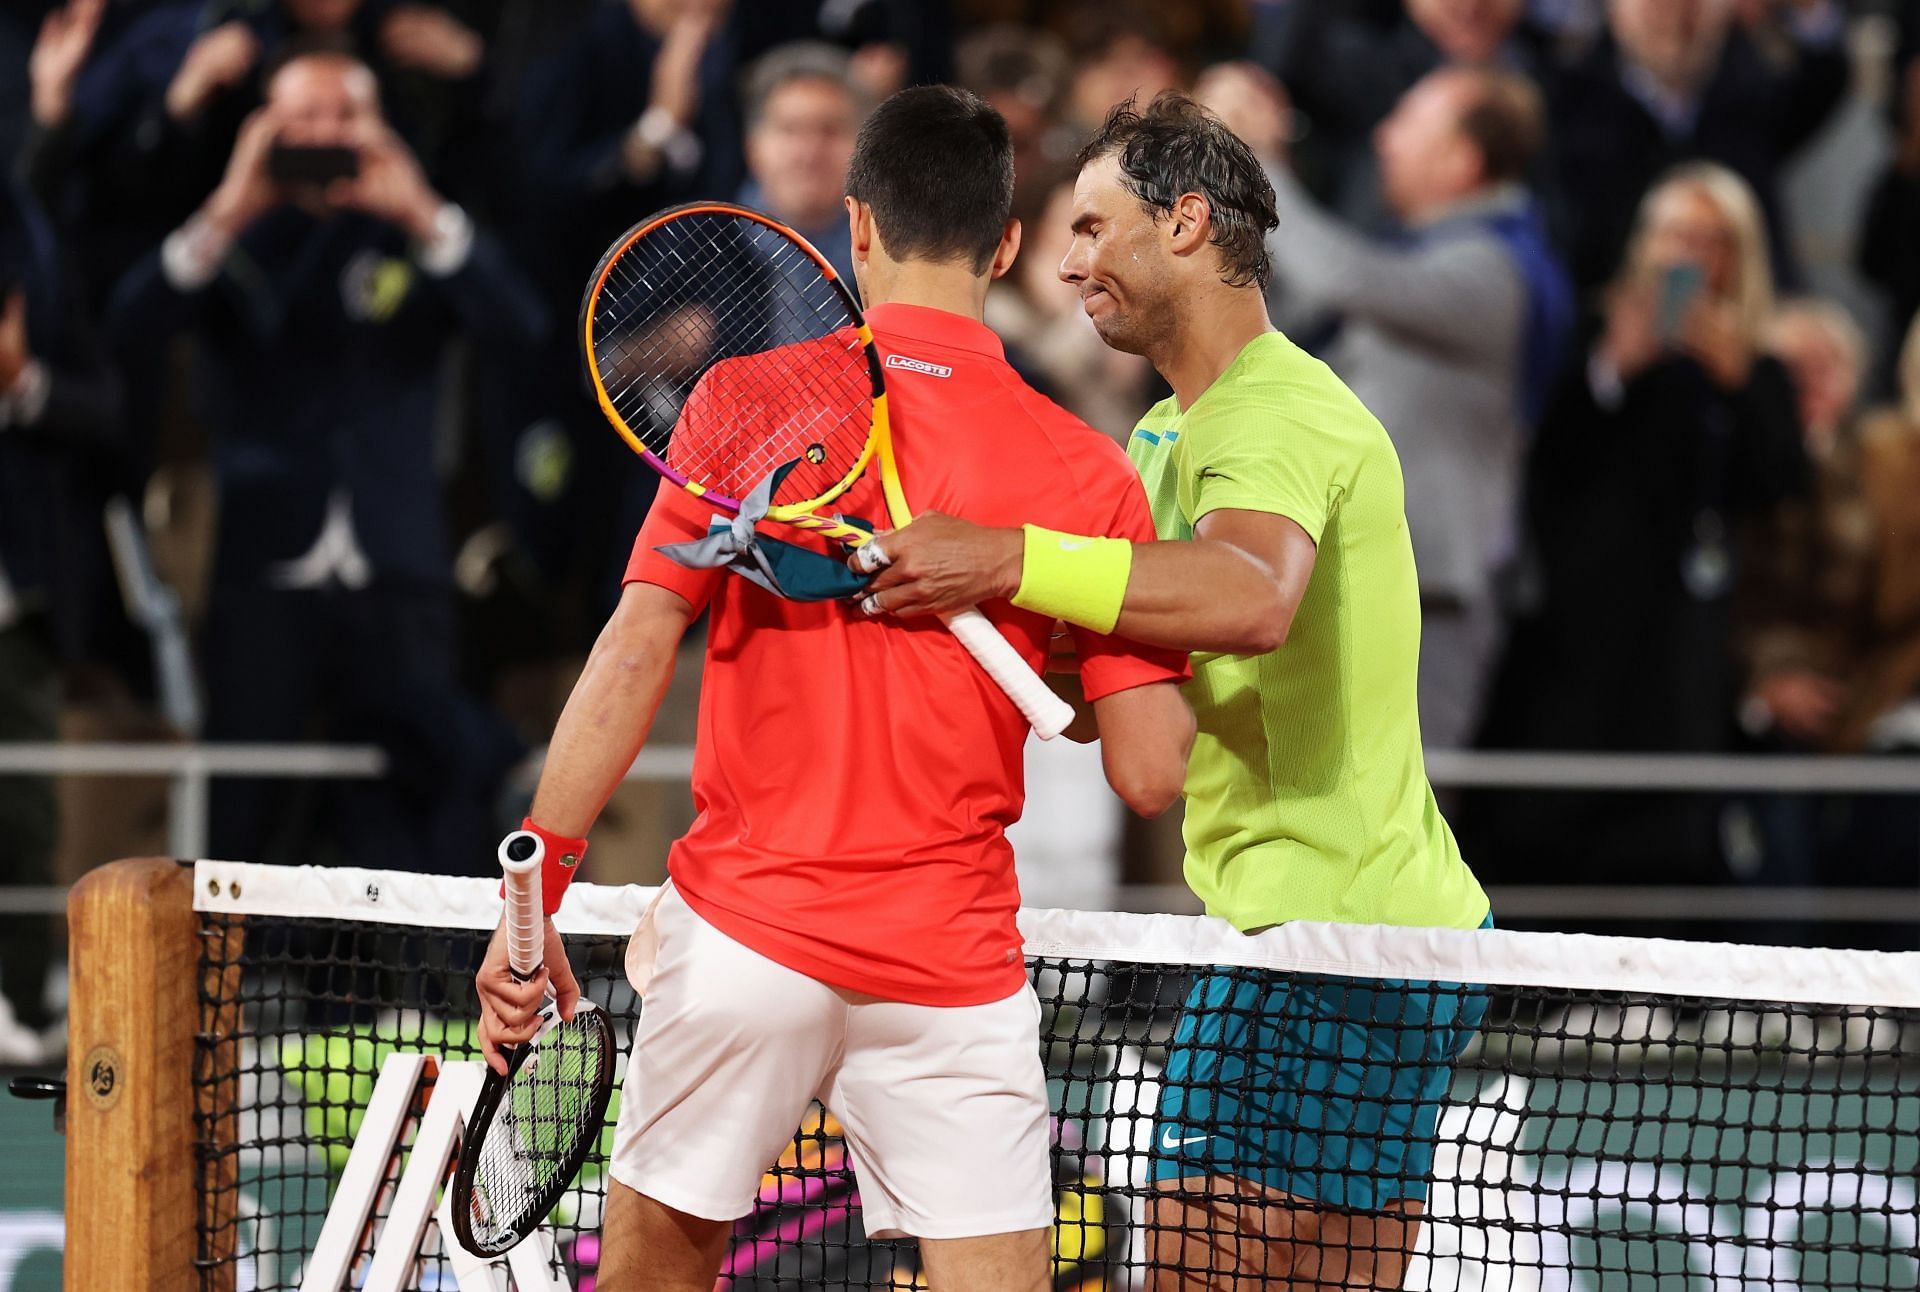 Novak Djokovic will look to narrow the gap between himself and Rafael Nadal in the Grand Slam race